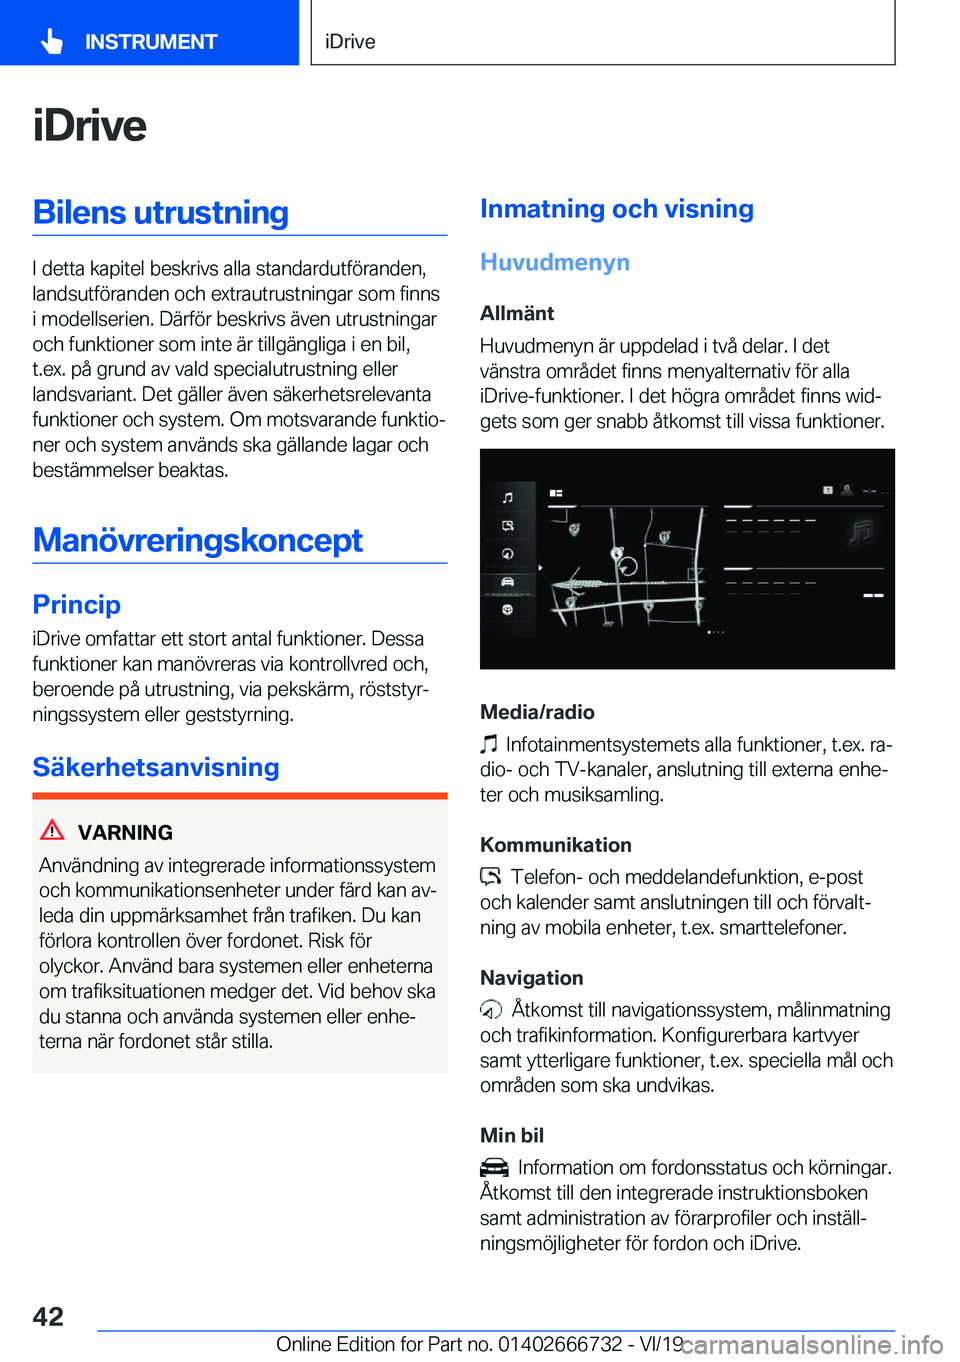 BMW M5 2020  InstruktionsbÖcker (in Swedish) �i�D�r�i�v�e�B�i�l�e�n�s��u�t�r�u�s�t�n�i�n�g
�I��d�e�t�t�a��k�a�p�i�t�e�l��b�e�s�k�r�i�v�s��a�l�l�a��s�t�a�n�d�a�r�d�u�t�f�